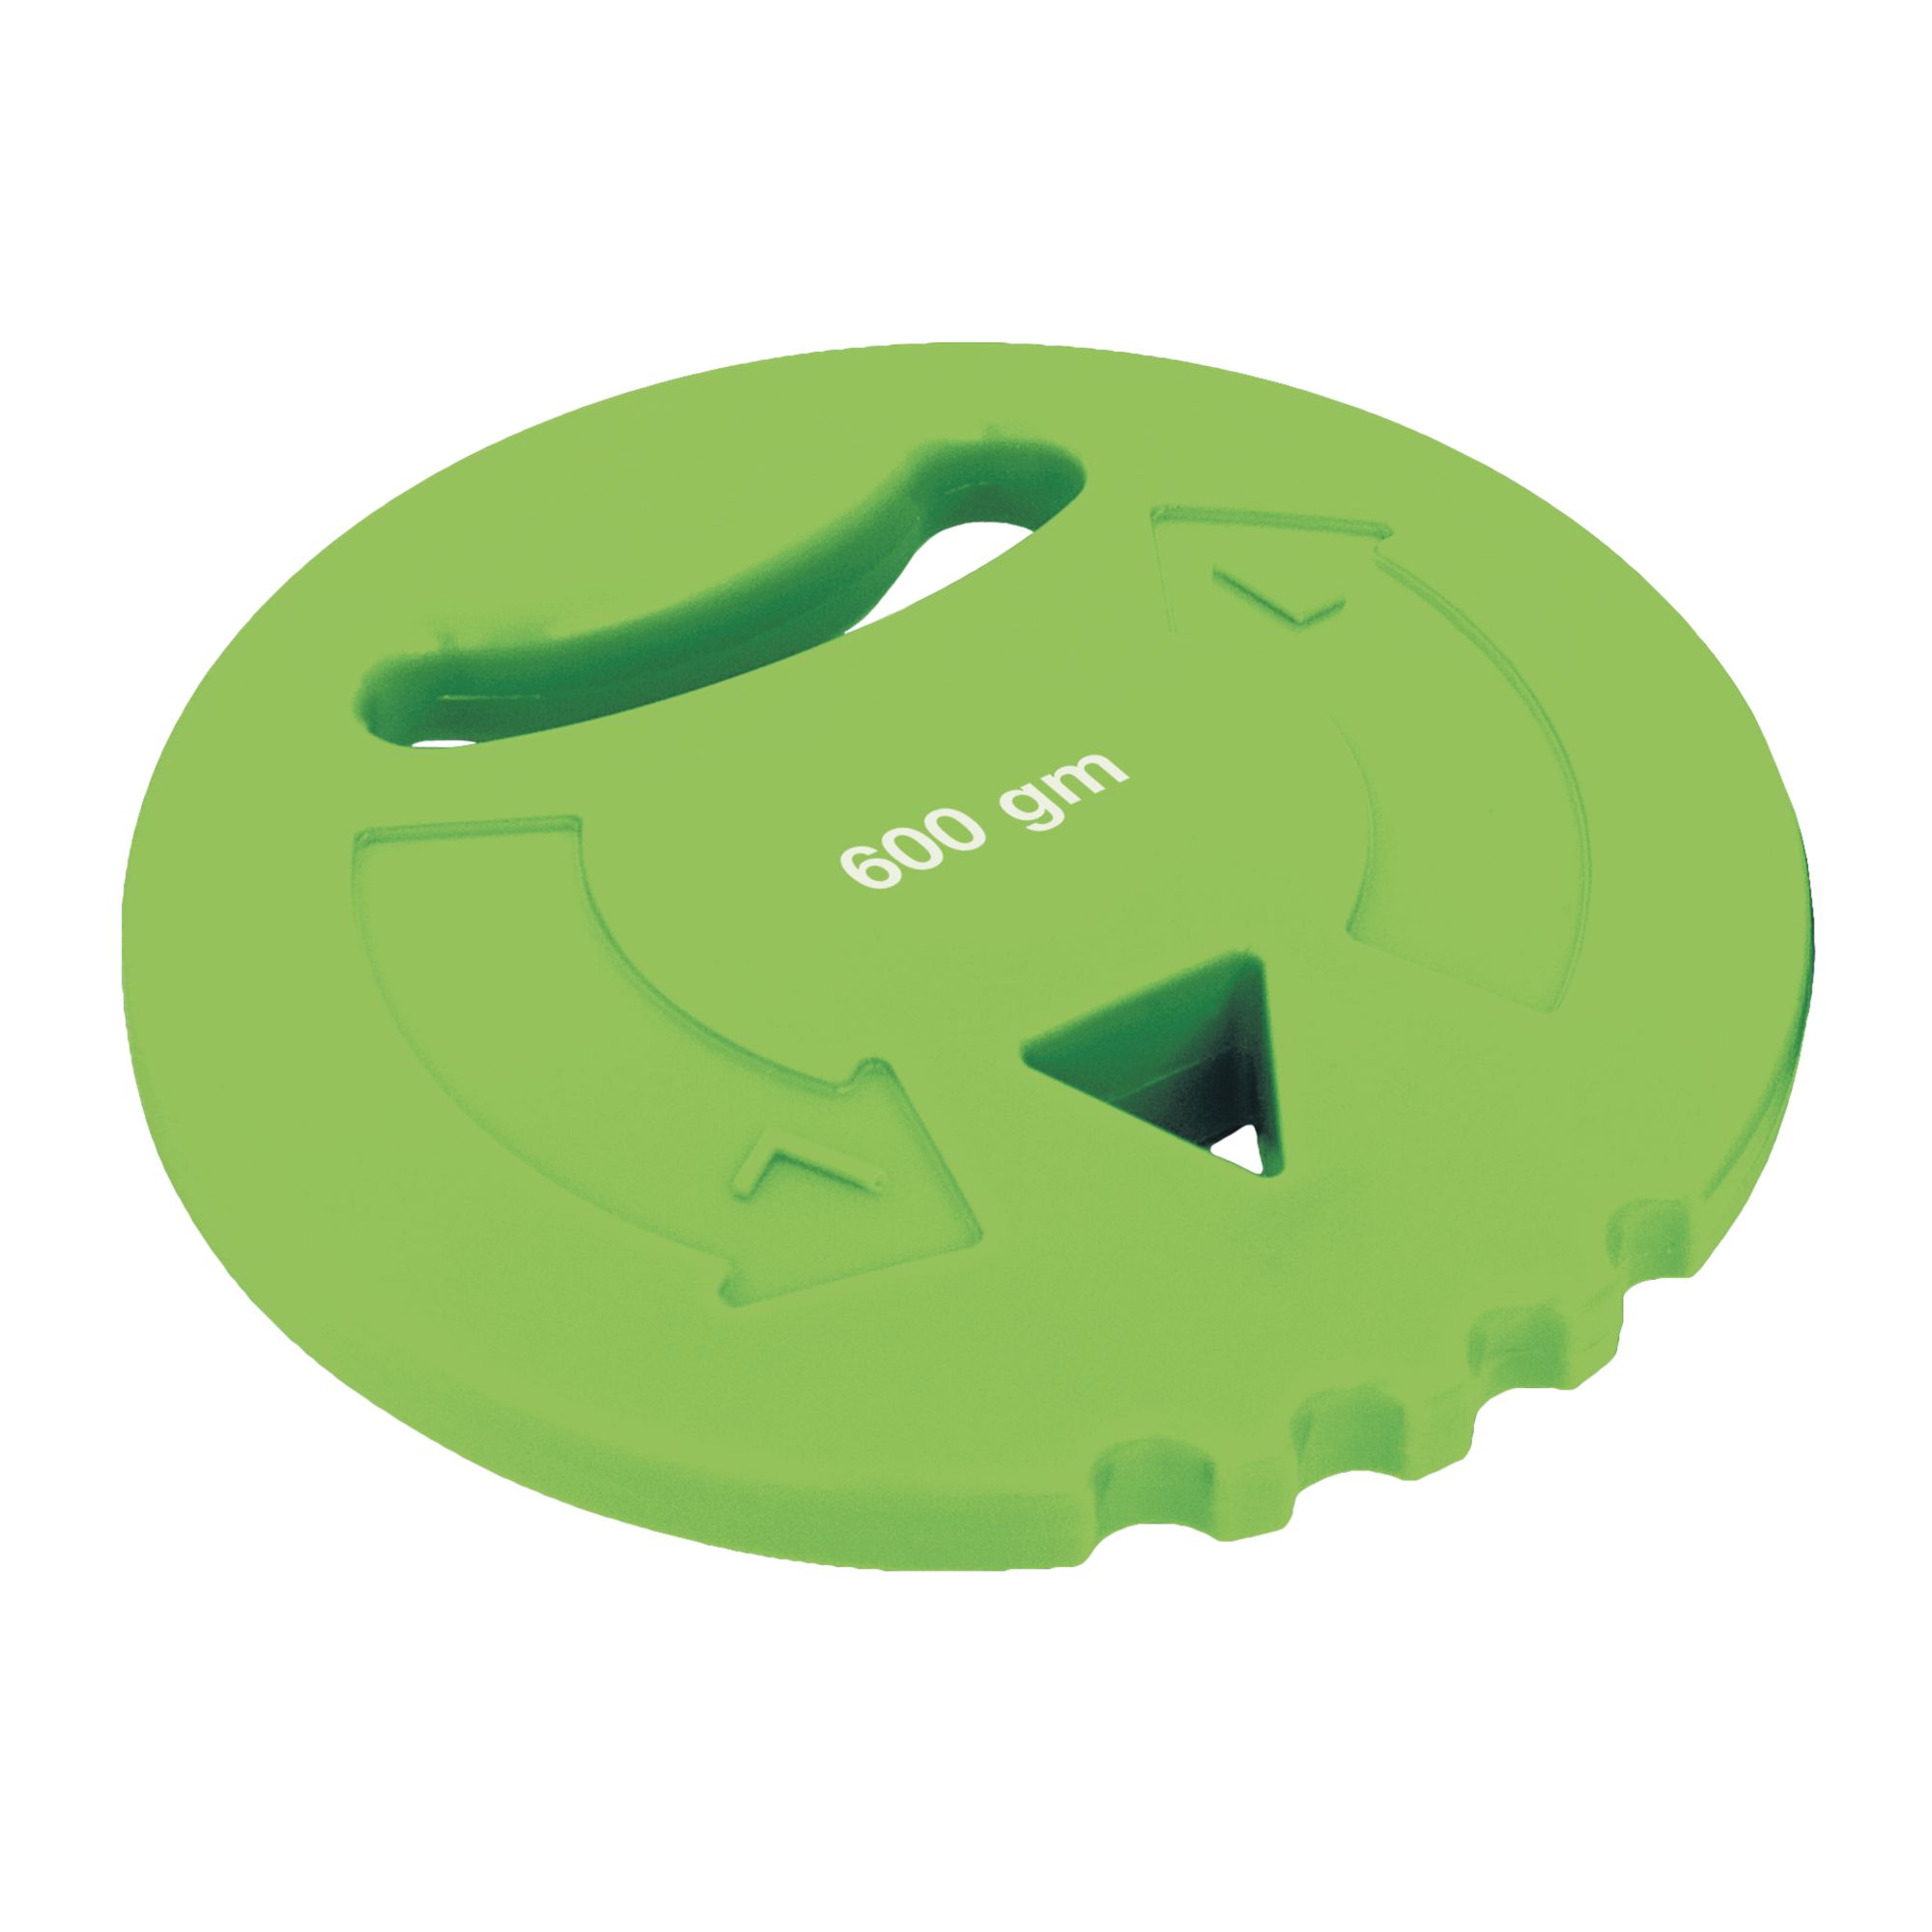 Soft Pvc Multi-throw Discus Green 0.6kg